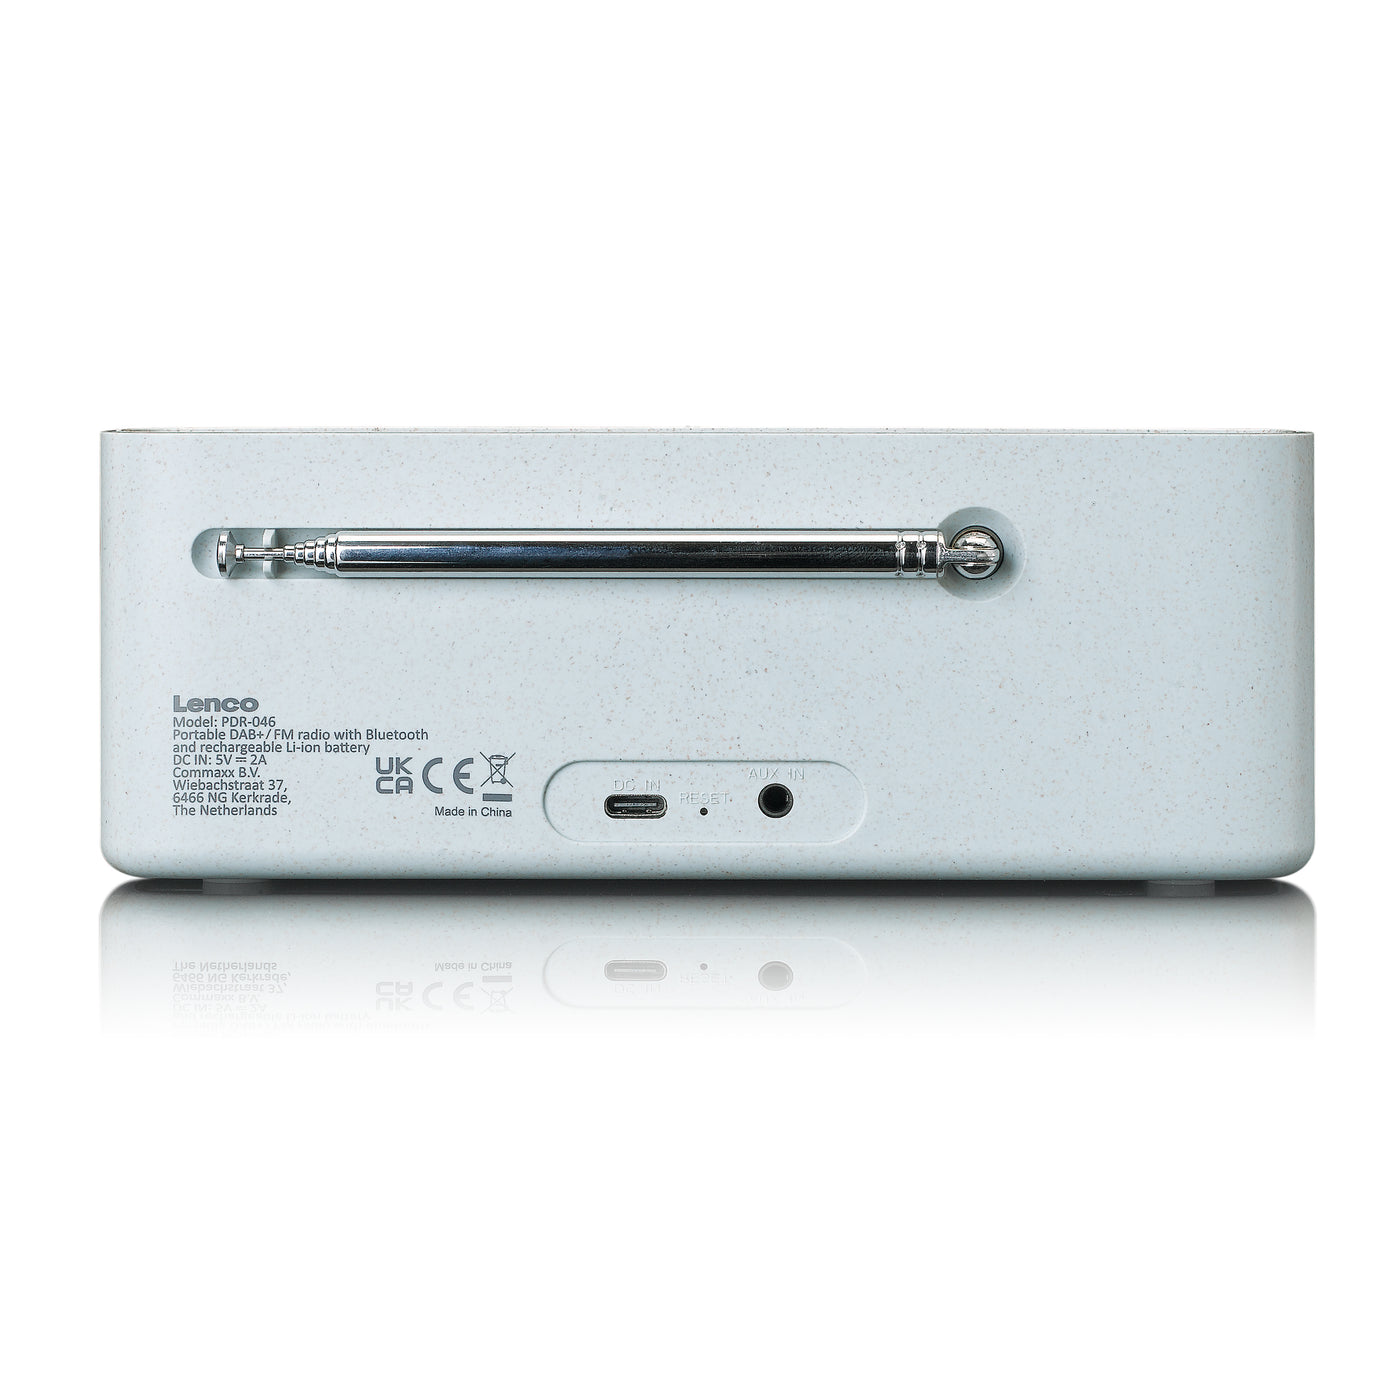 Lenco PDR-046GY - Eco DAB+ Radio mit Bluetooth® 5.0, weiß/bambus